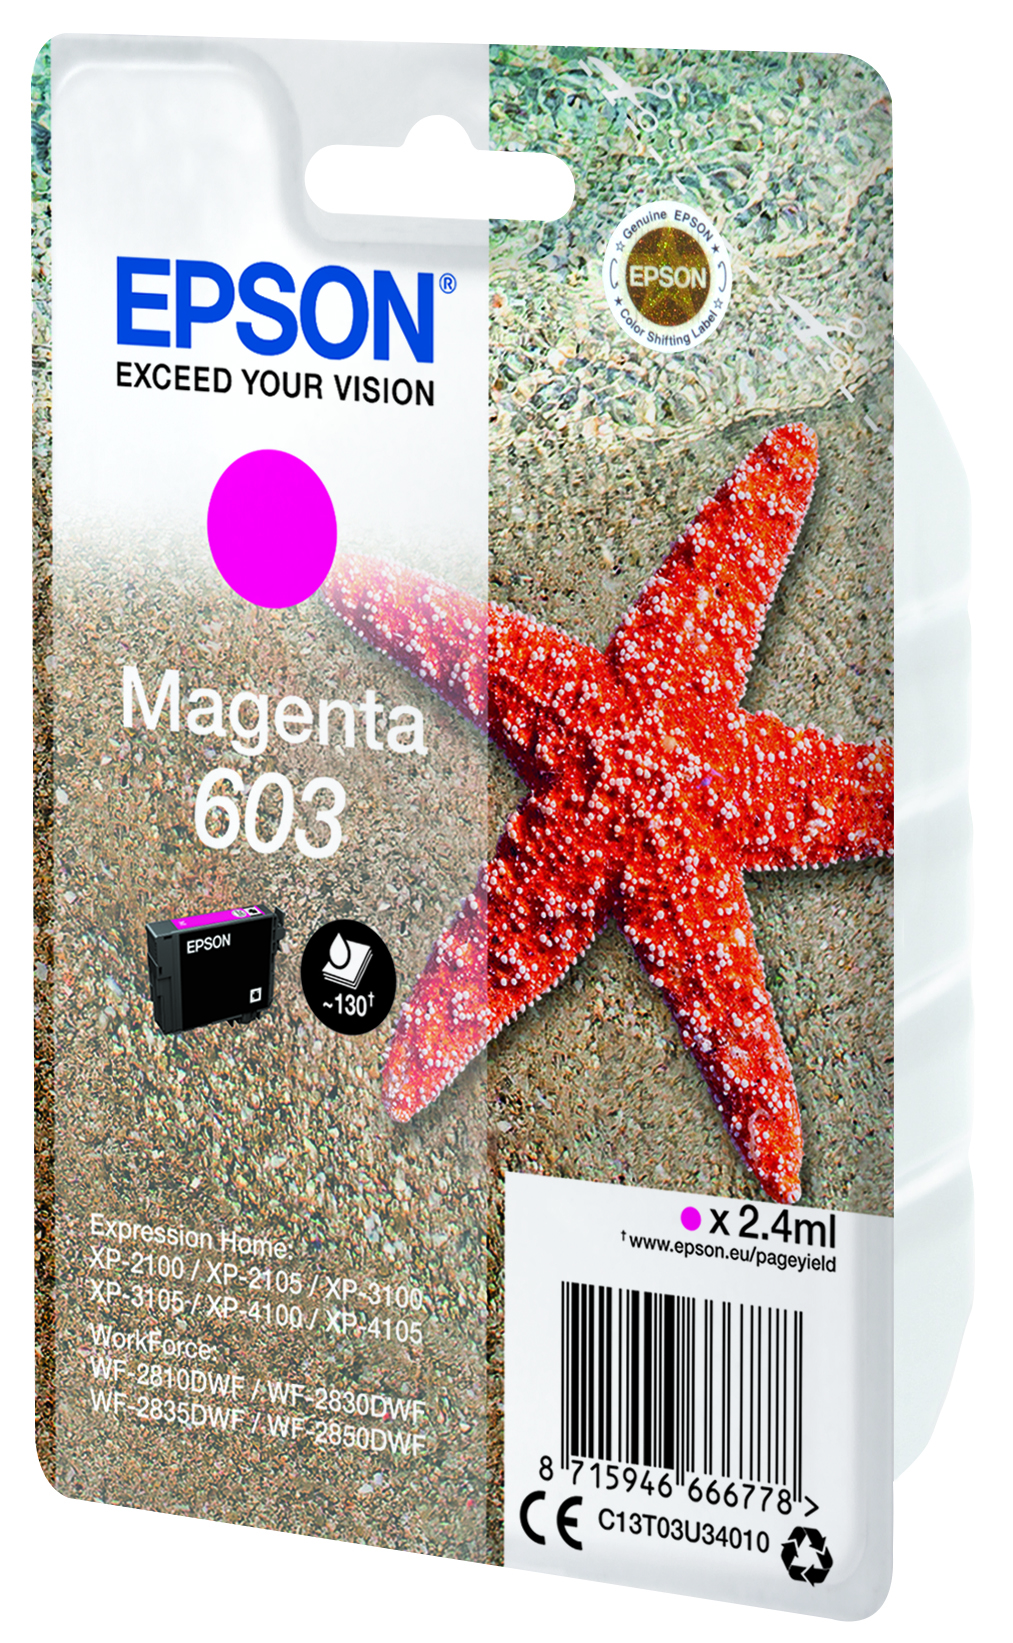 T03U Magenta 603 Ink Cartridge